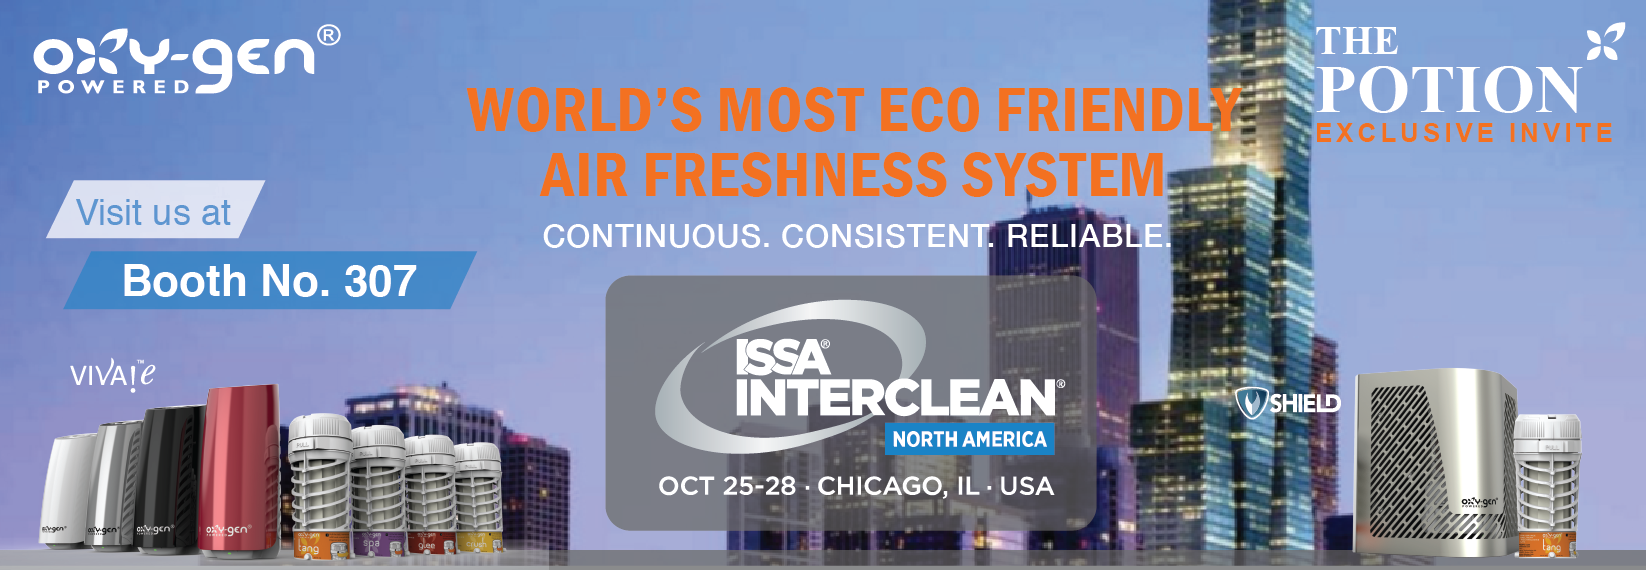 ISSA Interclean North America, Chicago 25-28 October 2016